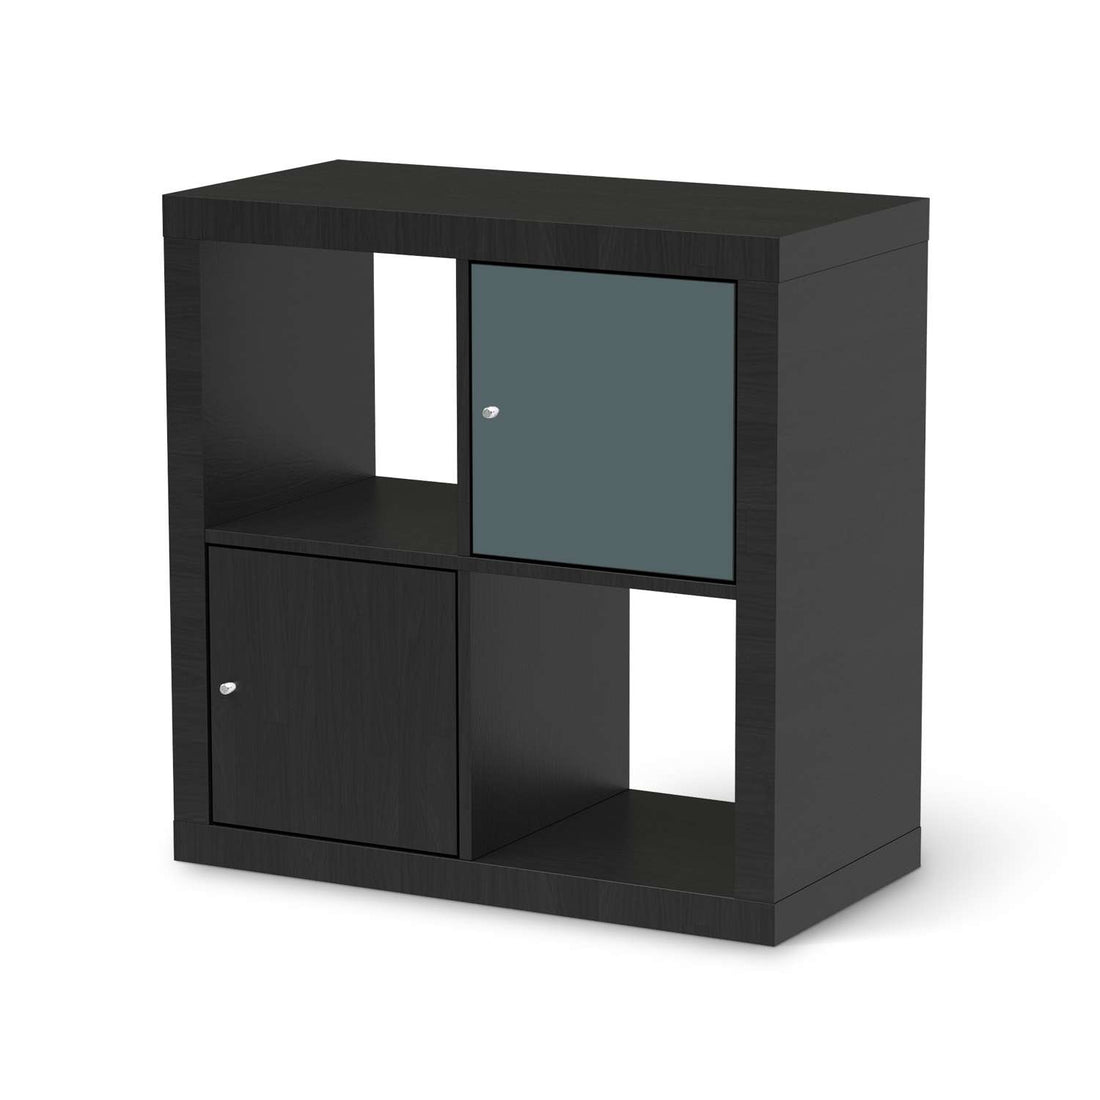 Selbstklebende Folie Blaugrau Light - IKEA Kallax Regal 1 Türe - schwarz